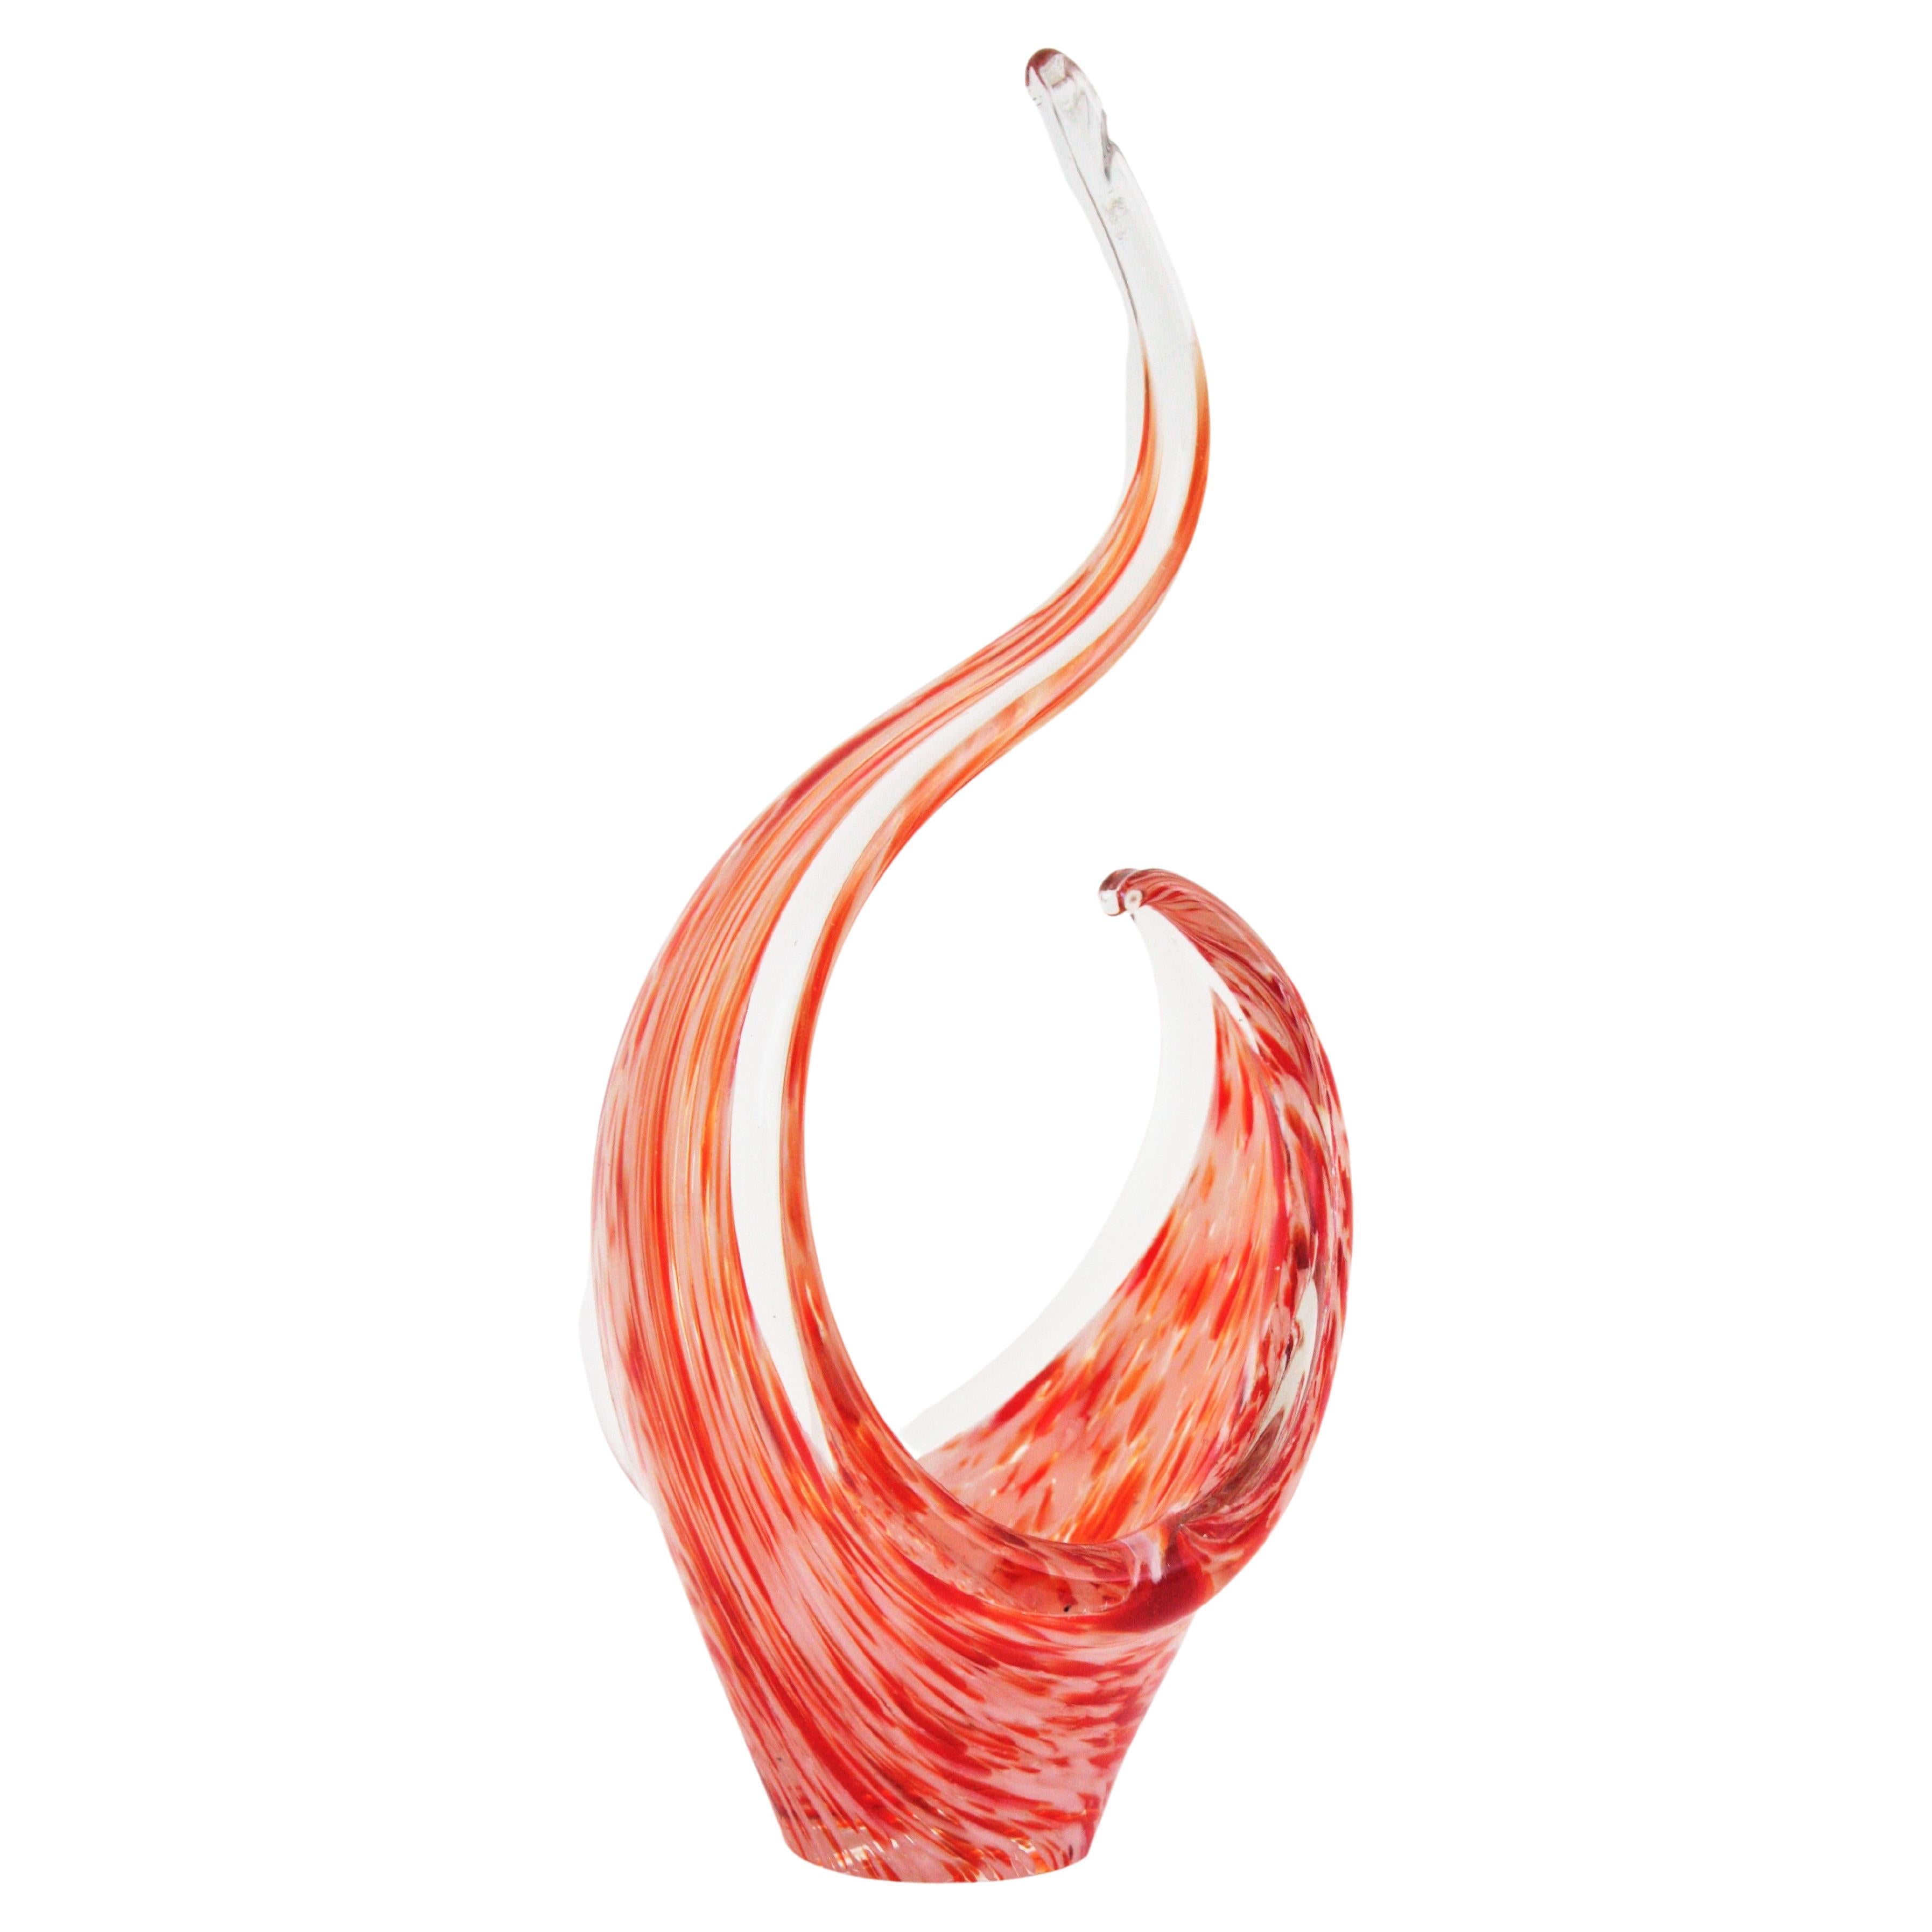 Bol de forme libre en verre d'art de Murano, orange et blanc tachet